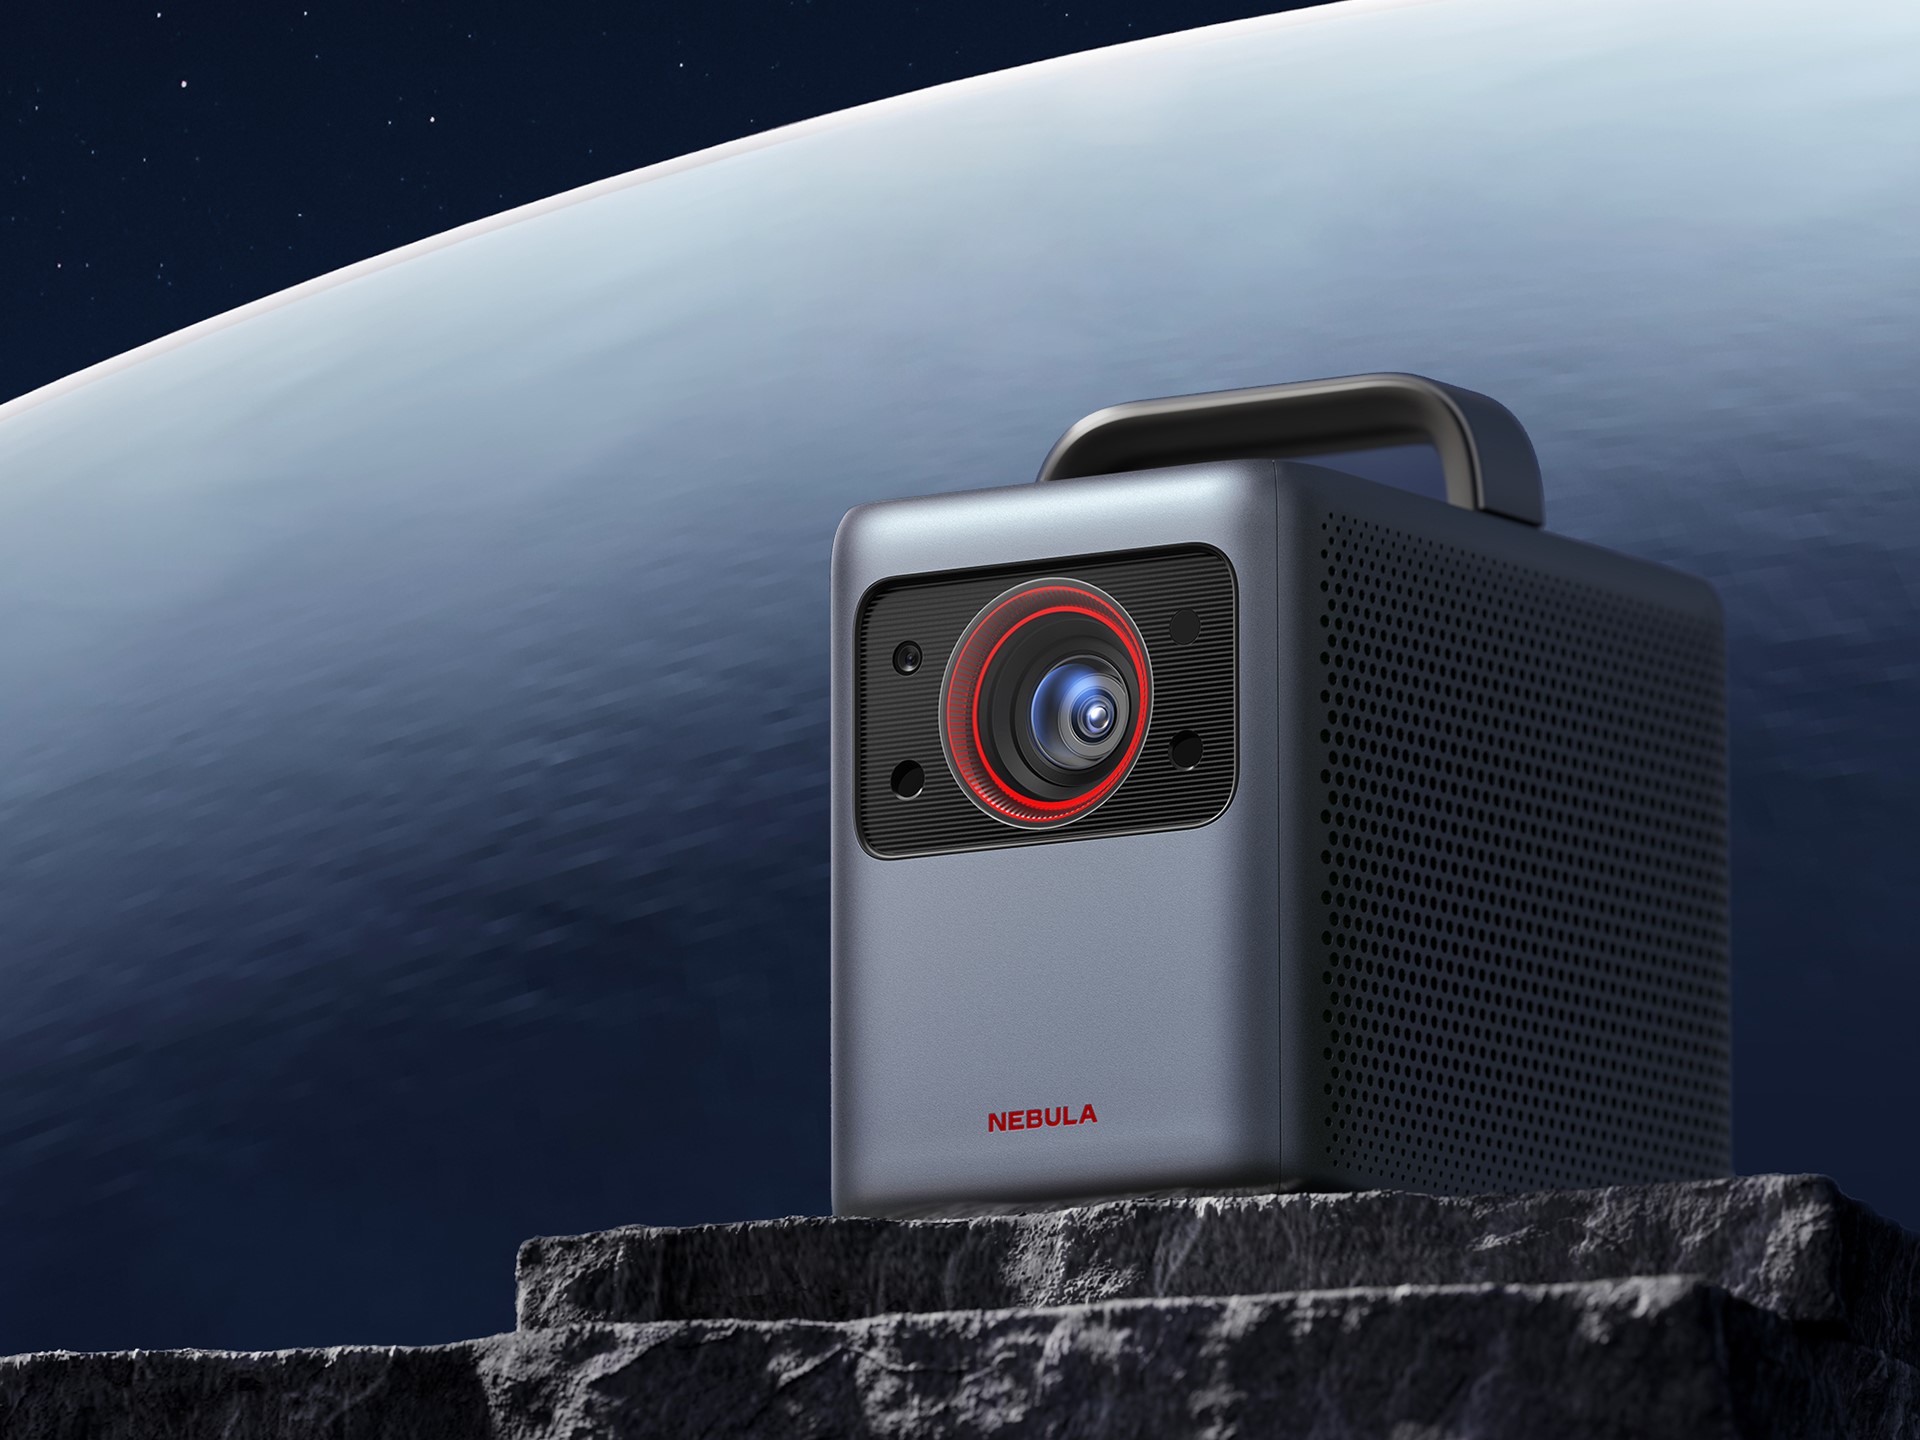 Open Box NEBULA 1080p Video Projector Anker Nebula Cosmos FHD Entertainment  D2140 - Black 